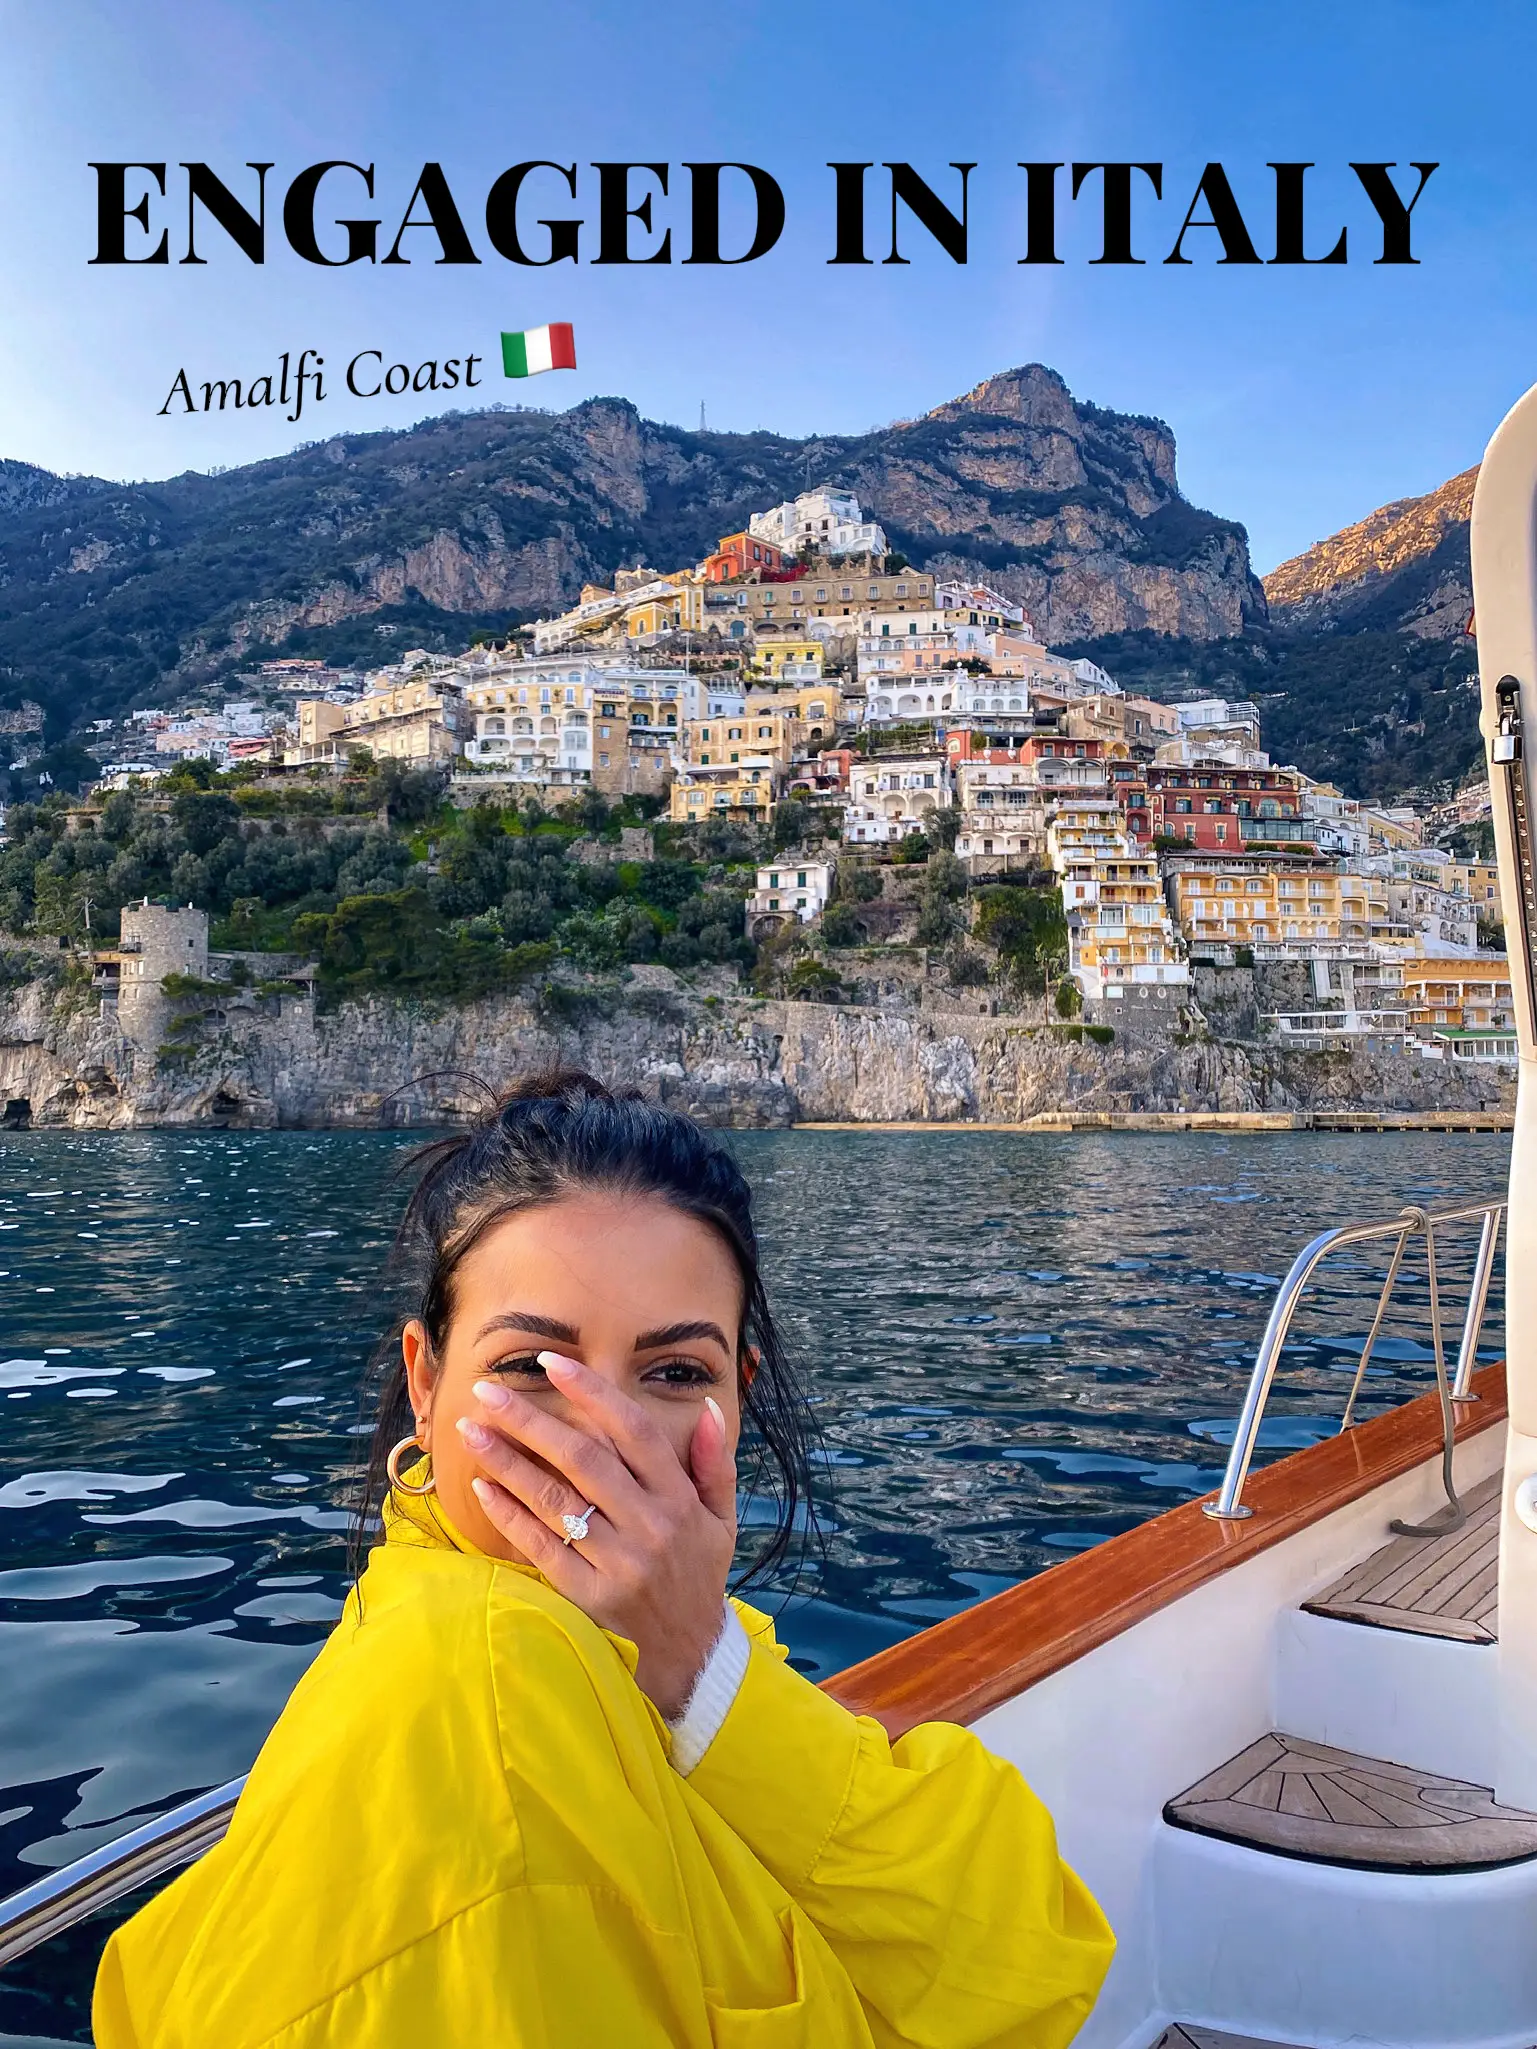 Tunnel of Love Isle of Capri - Lemon8 Search